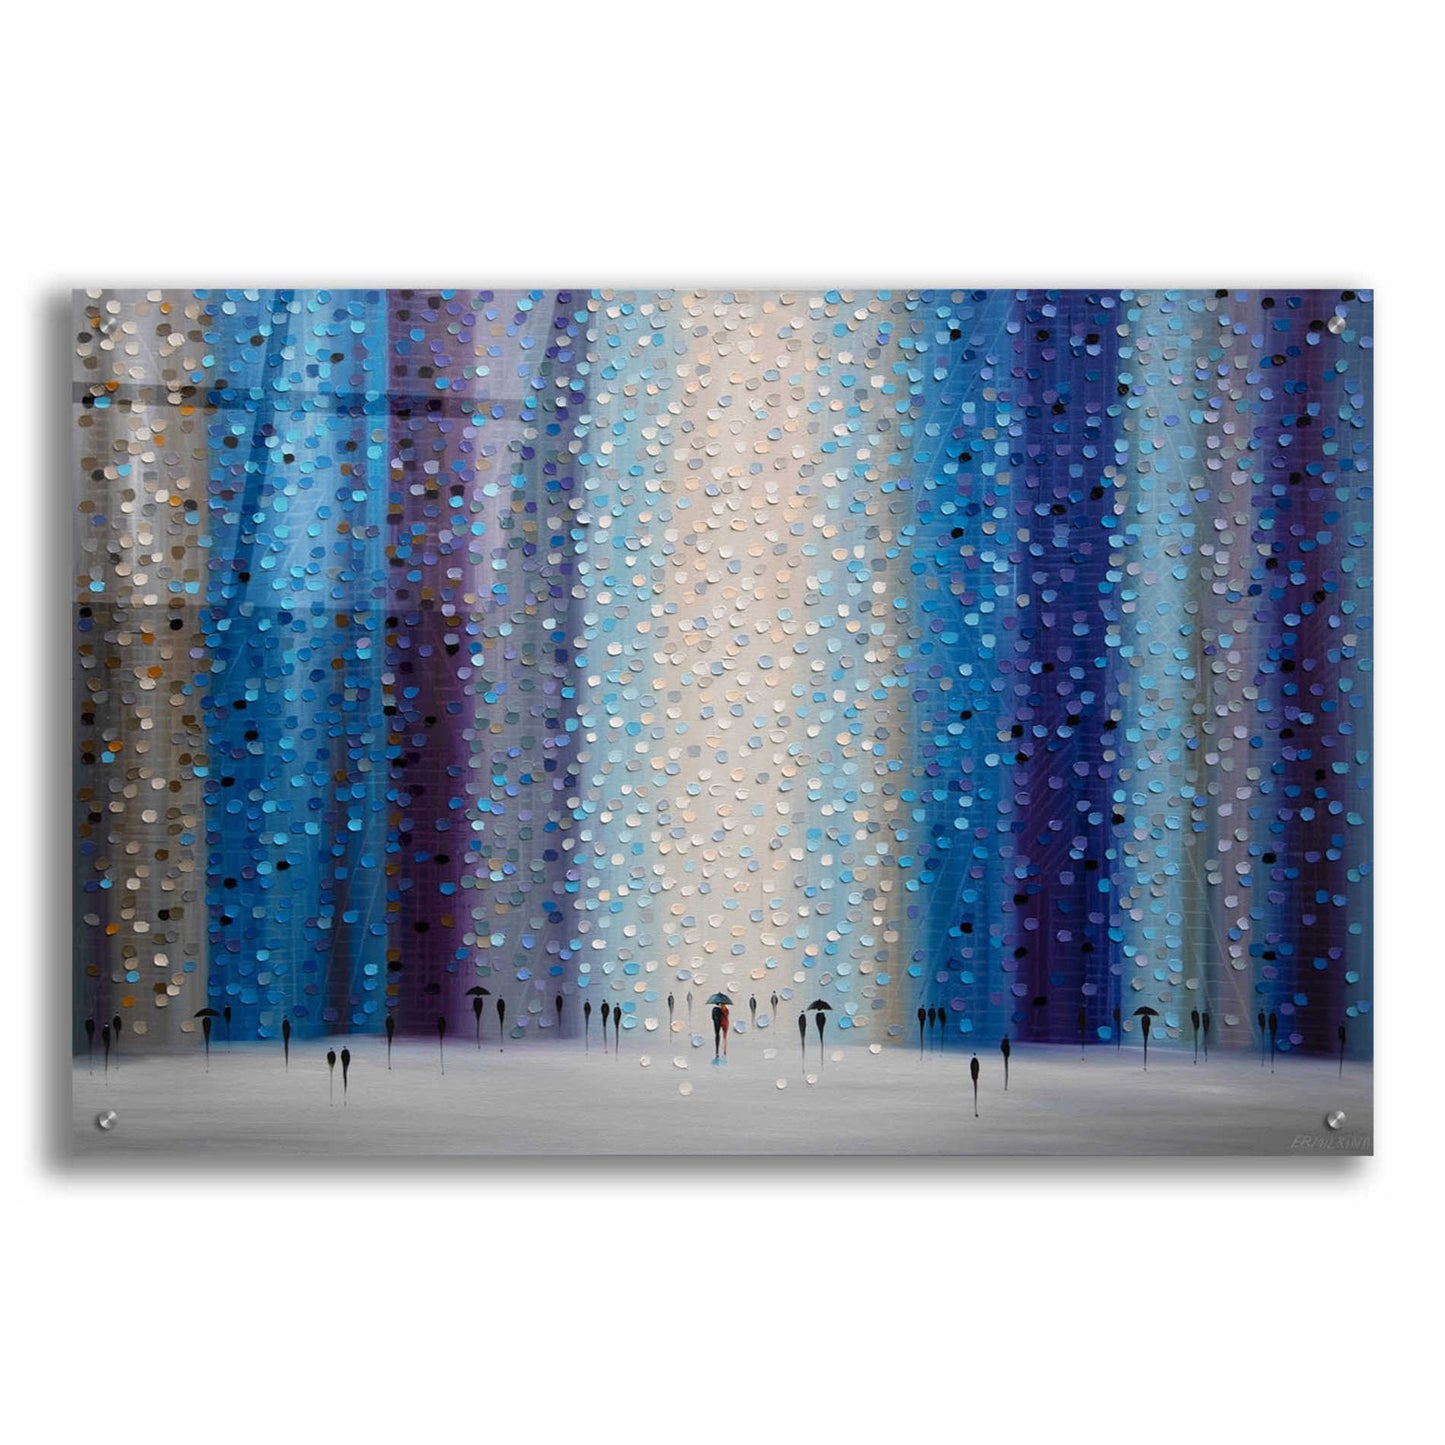 Epic Art 'Rainy City For' by Ekaterina Ermilkina Acrylic Glass Wall Art,36x24